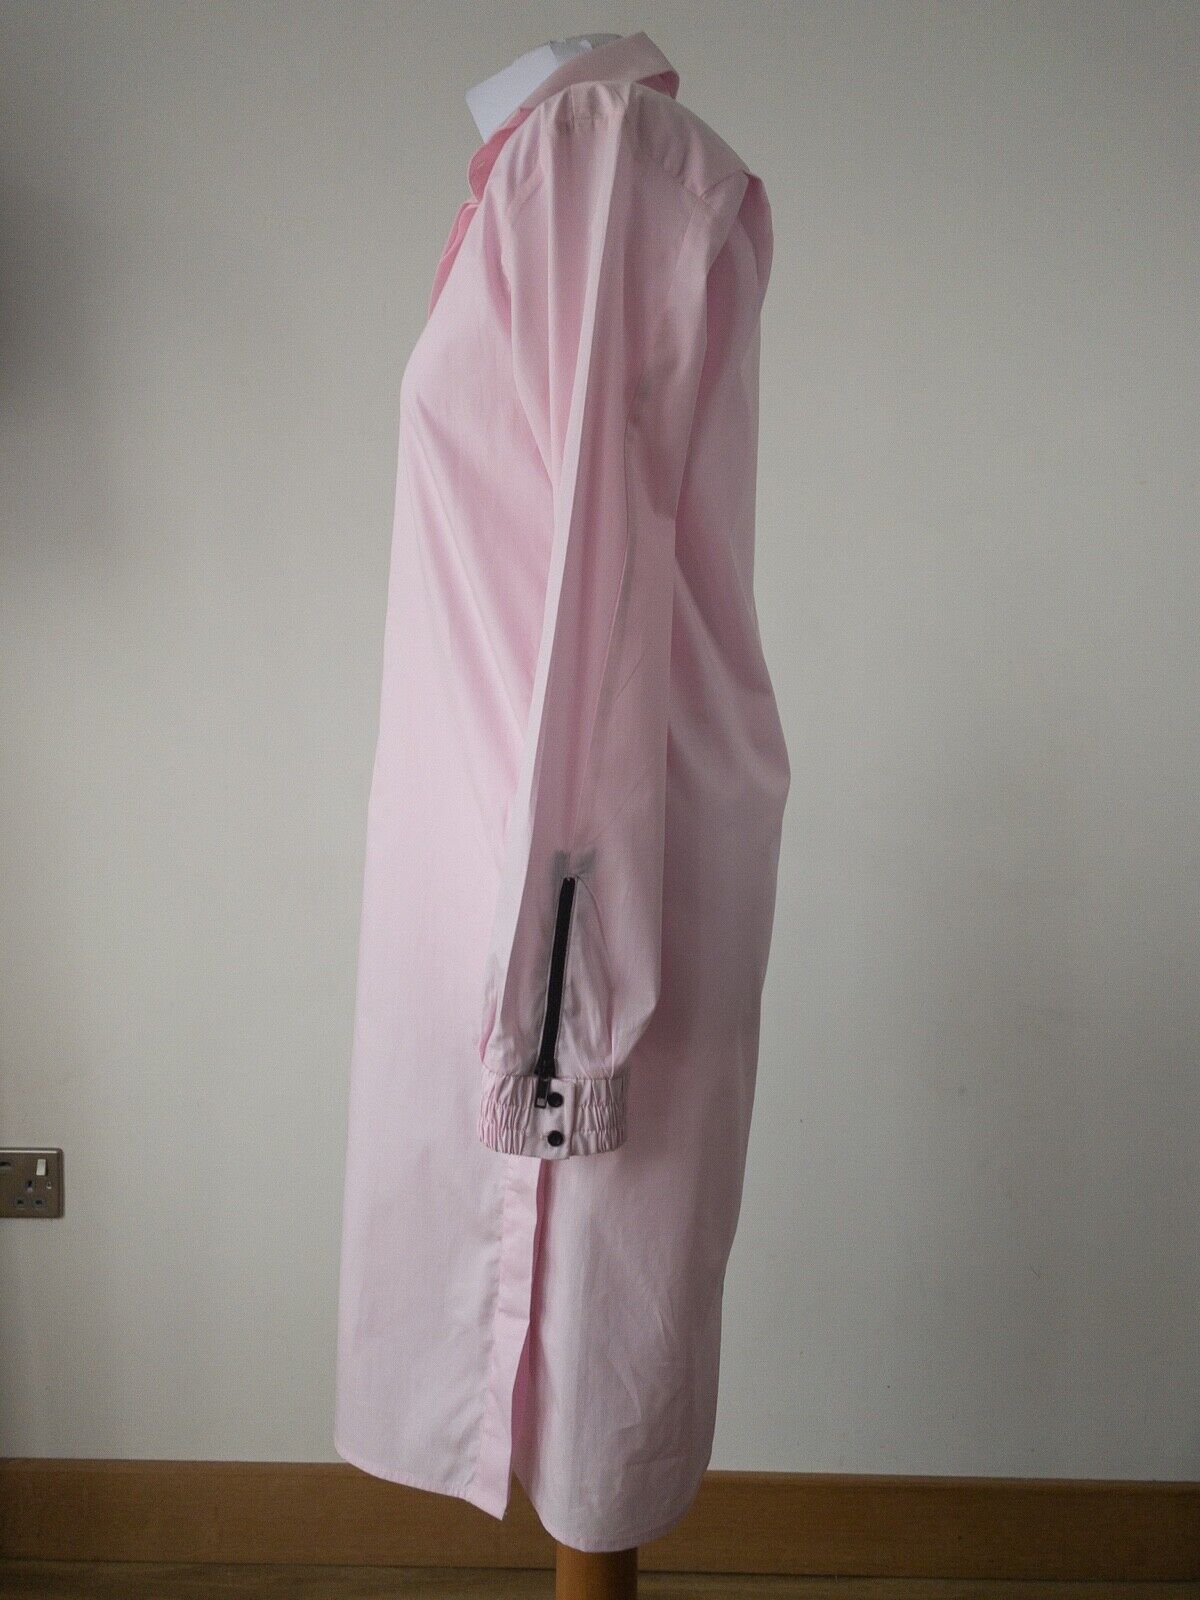 La Redoute Madame Louis-Gabriel Rouchi Pink Shirt Dress Sizes 6, 10